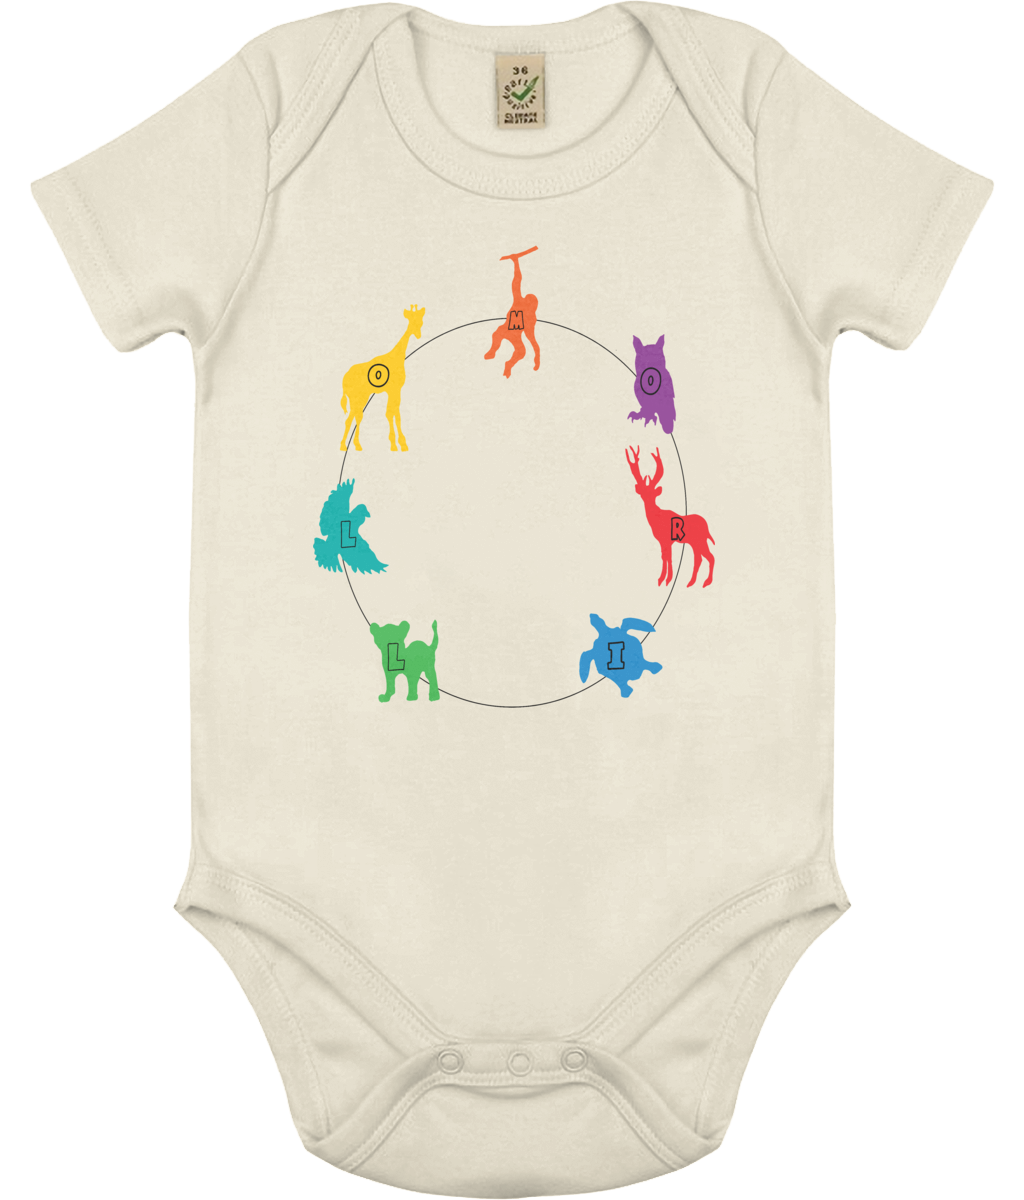 BABY ANIMAL ORGANIC COTTON BODYSUIT Children Clothing - MORILLO ENTERPRISE 